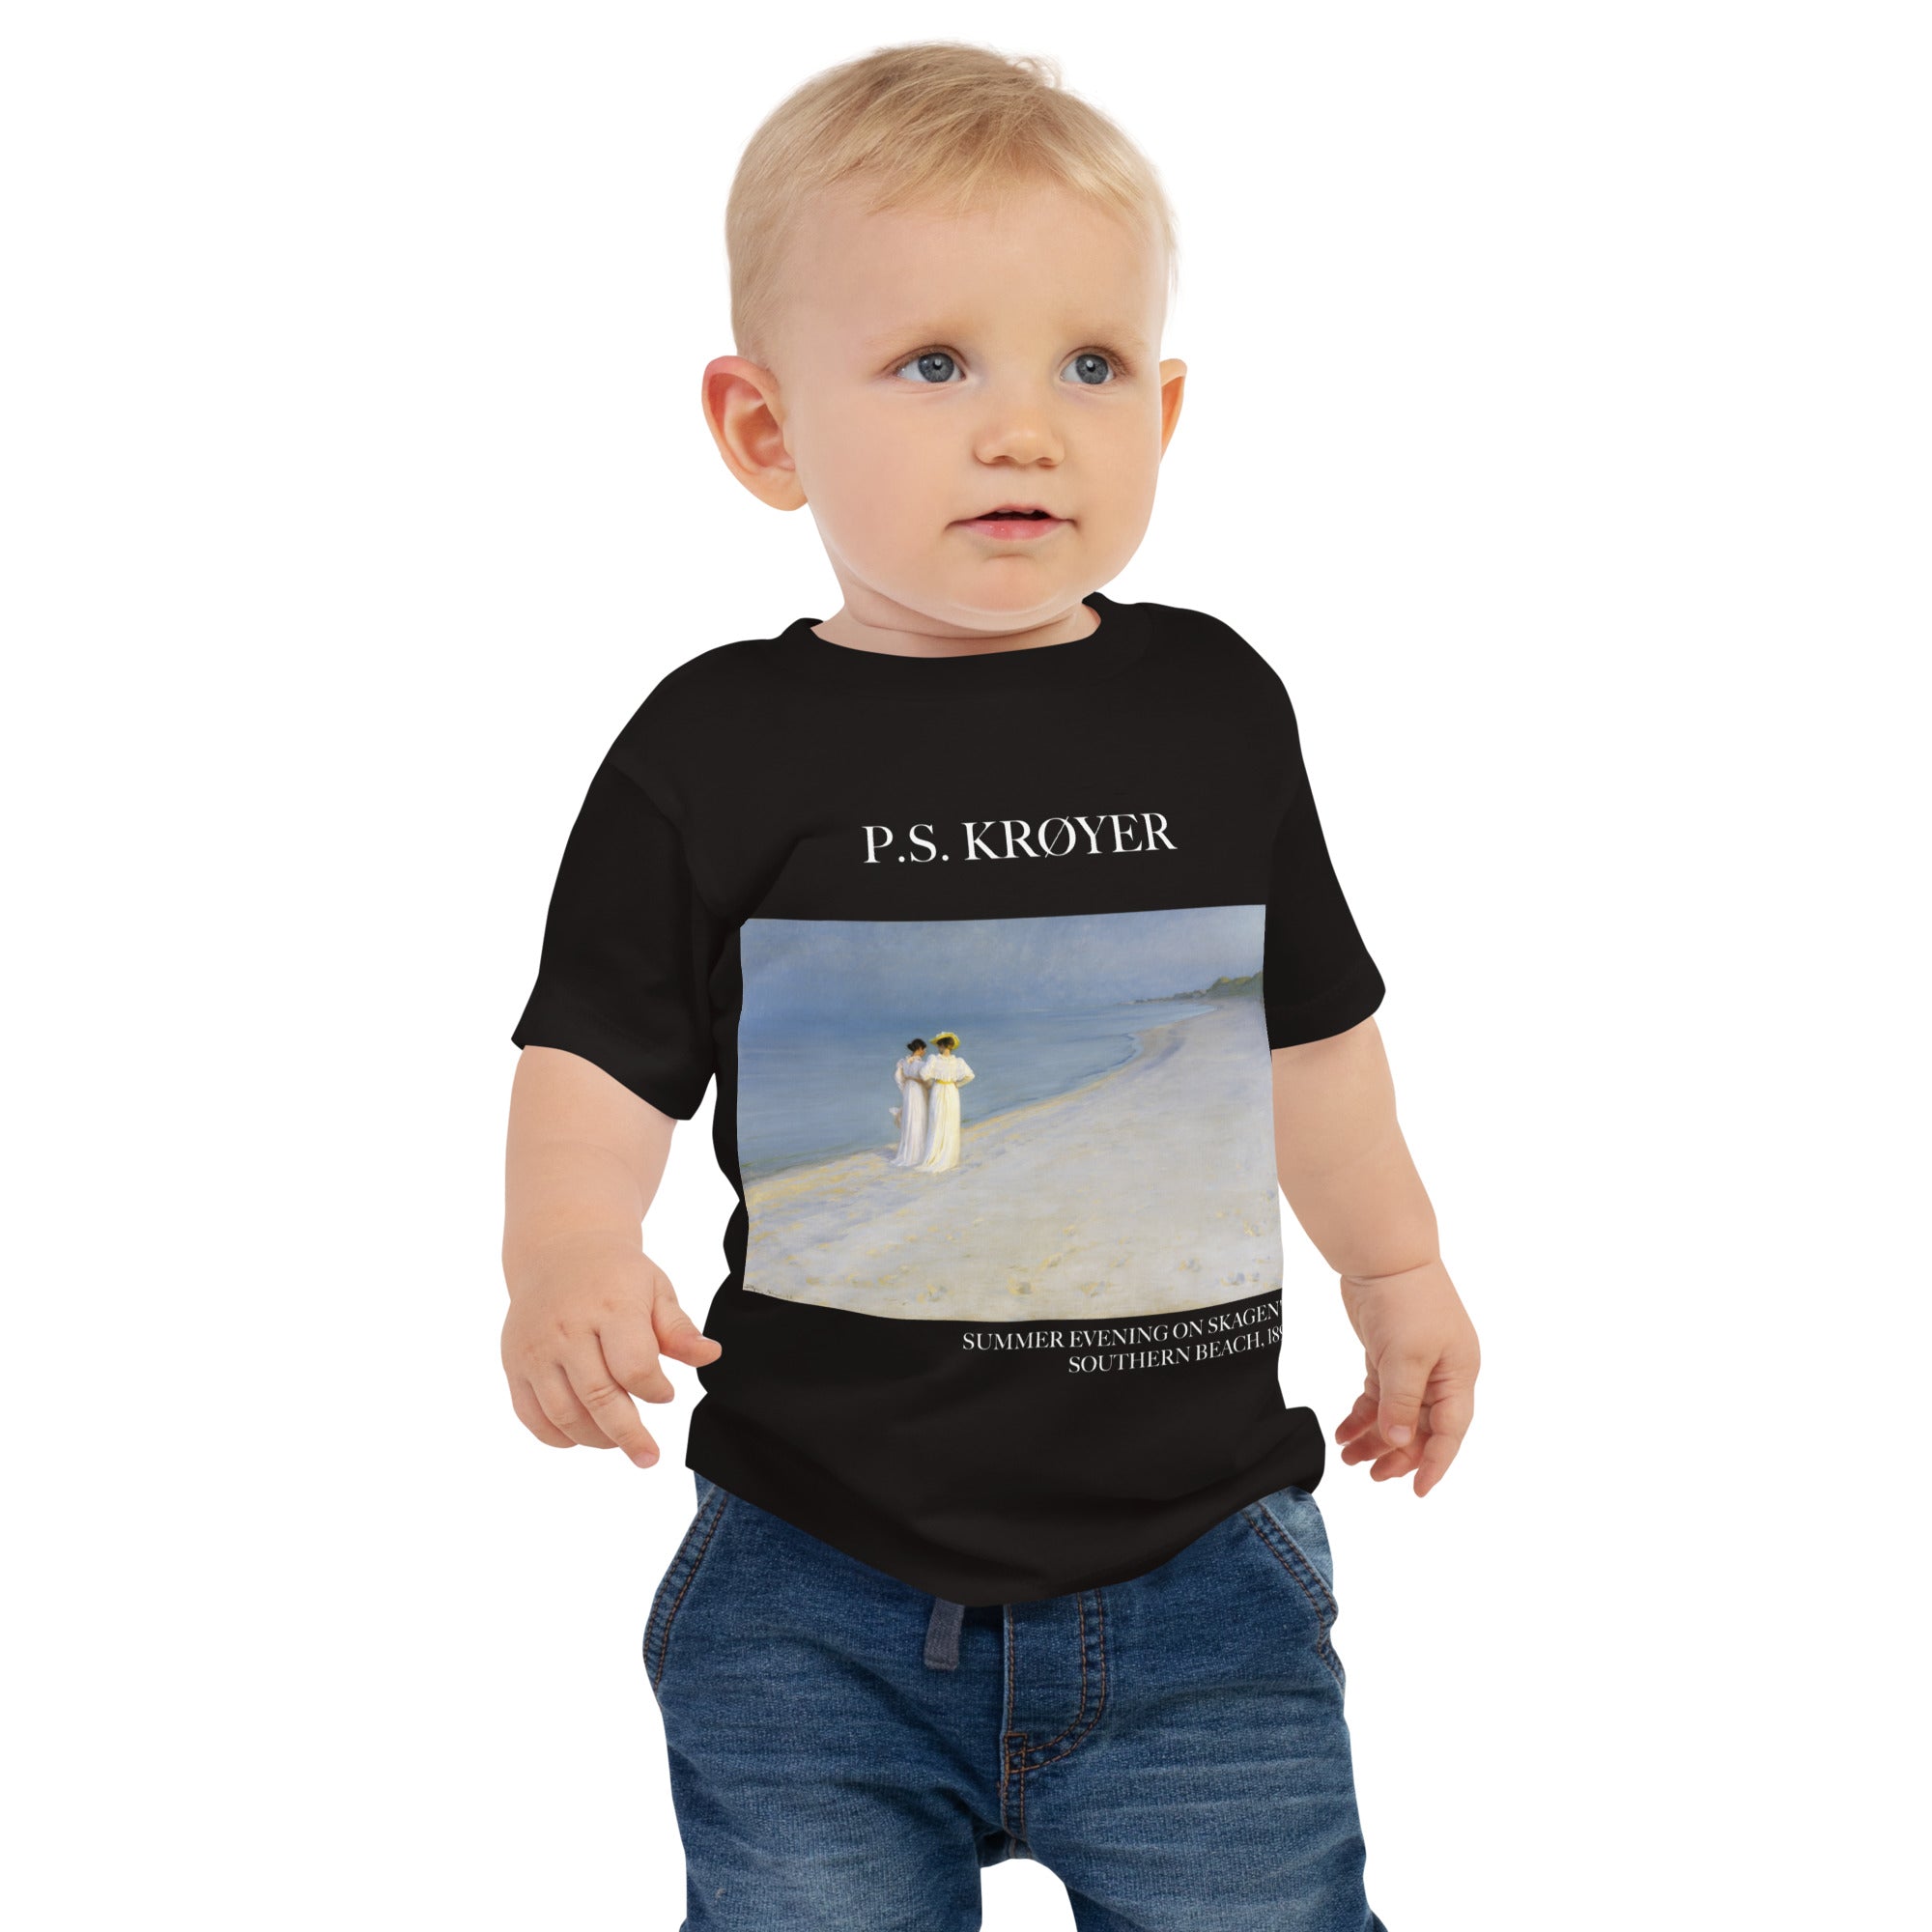 P.S. Krøyer 'Summer Evening on Skagen's Southern Beach' Famous Painting Baby Staple T-Shirt | Premium Baby Art Tee